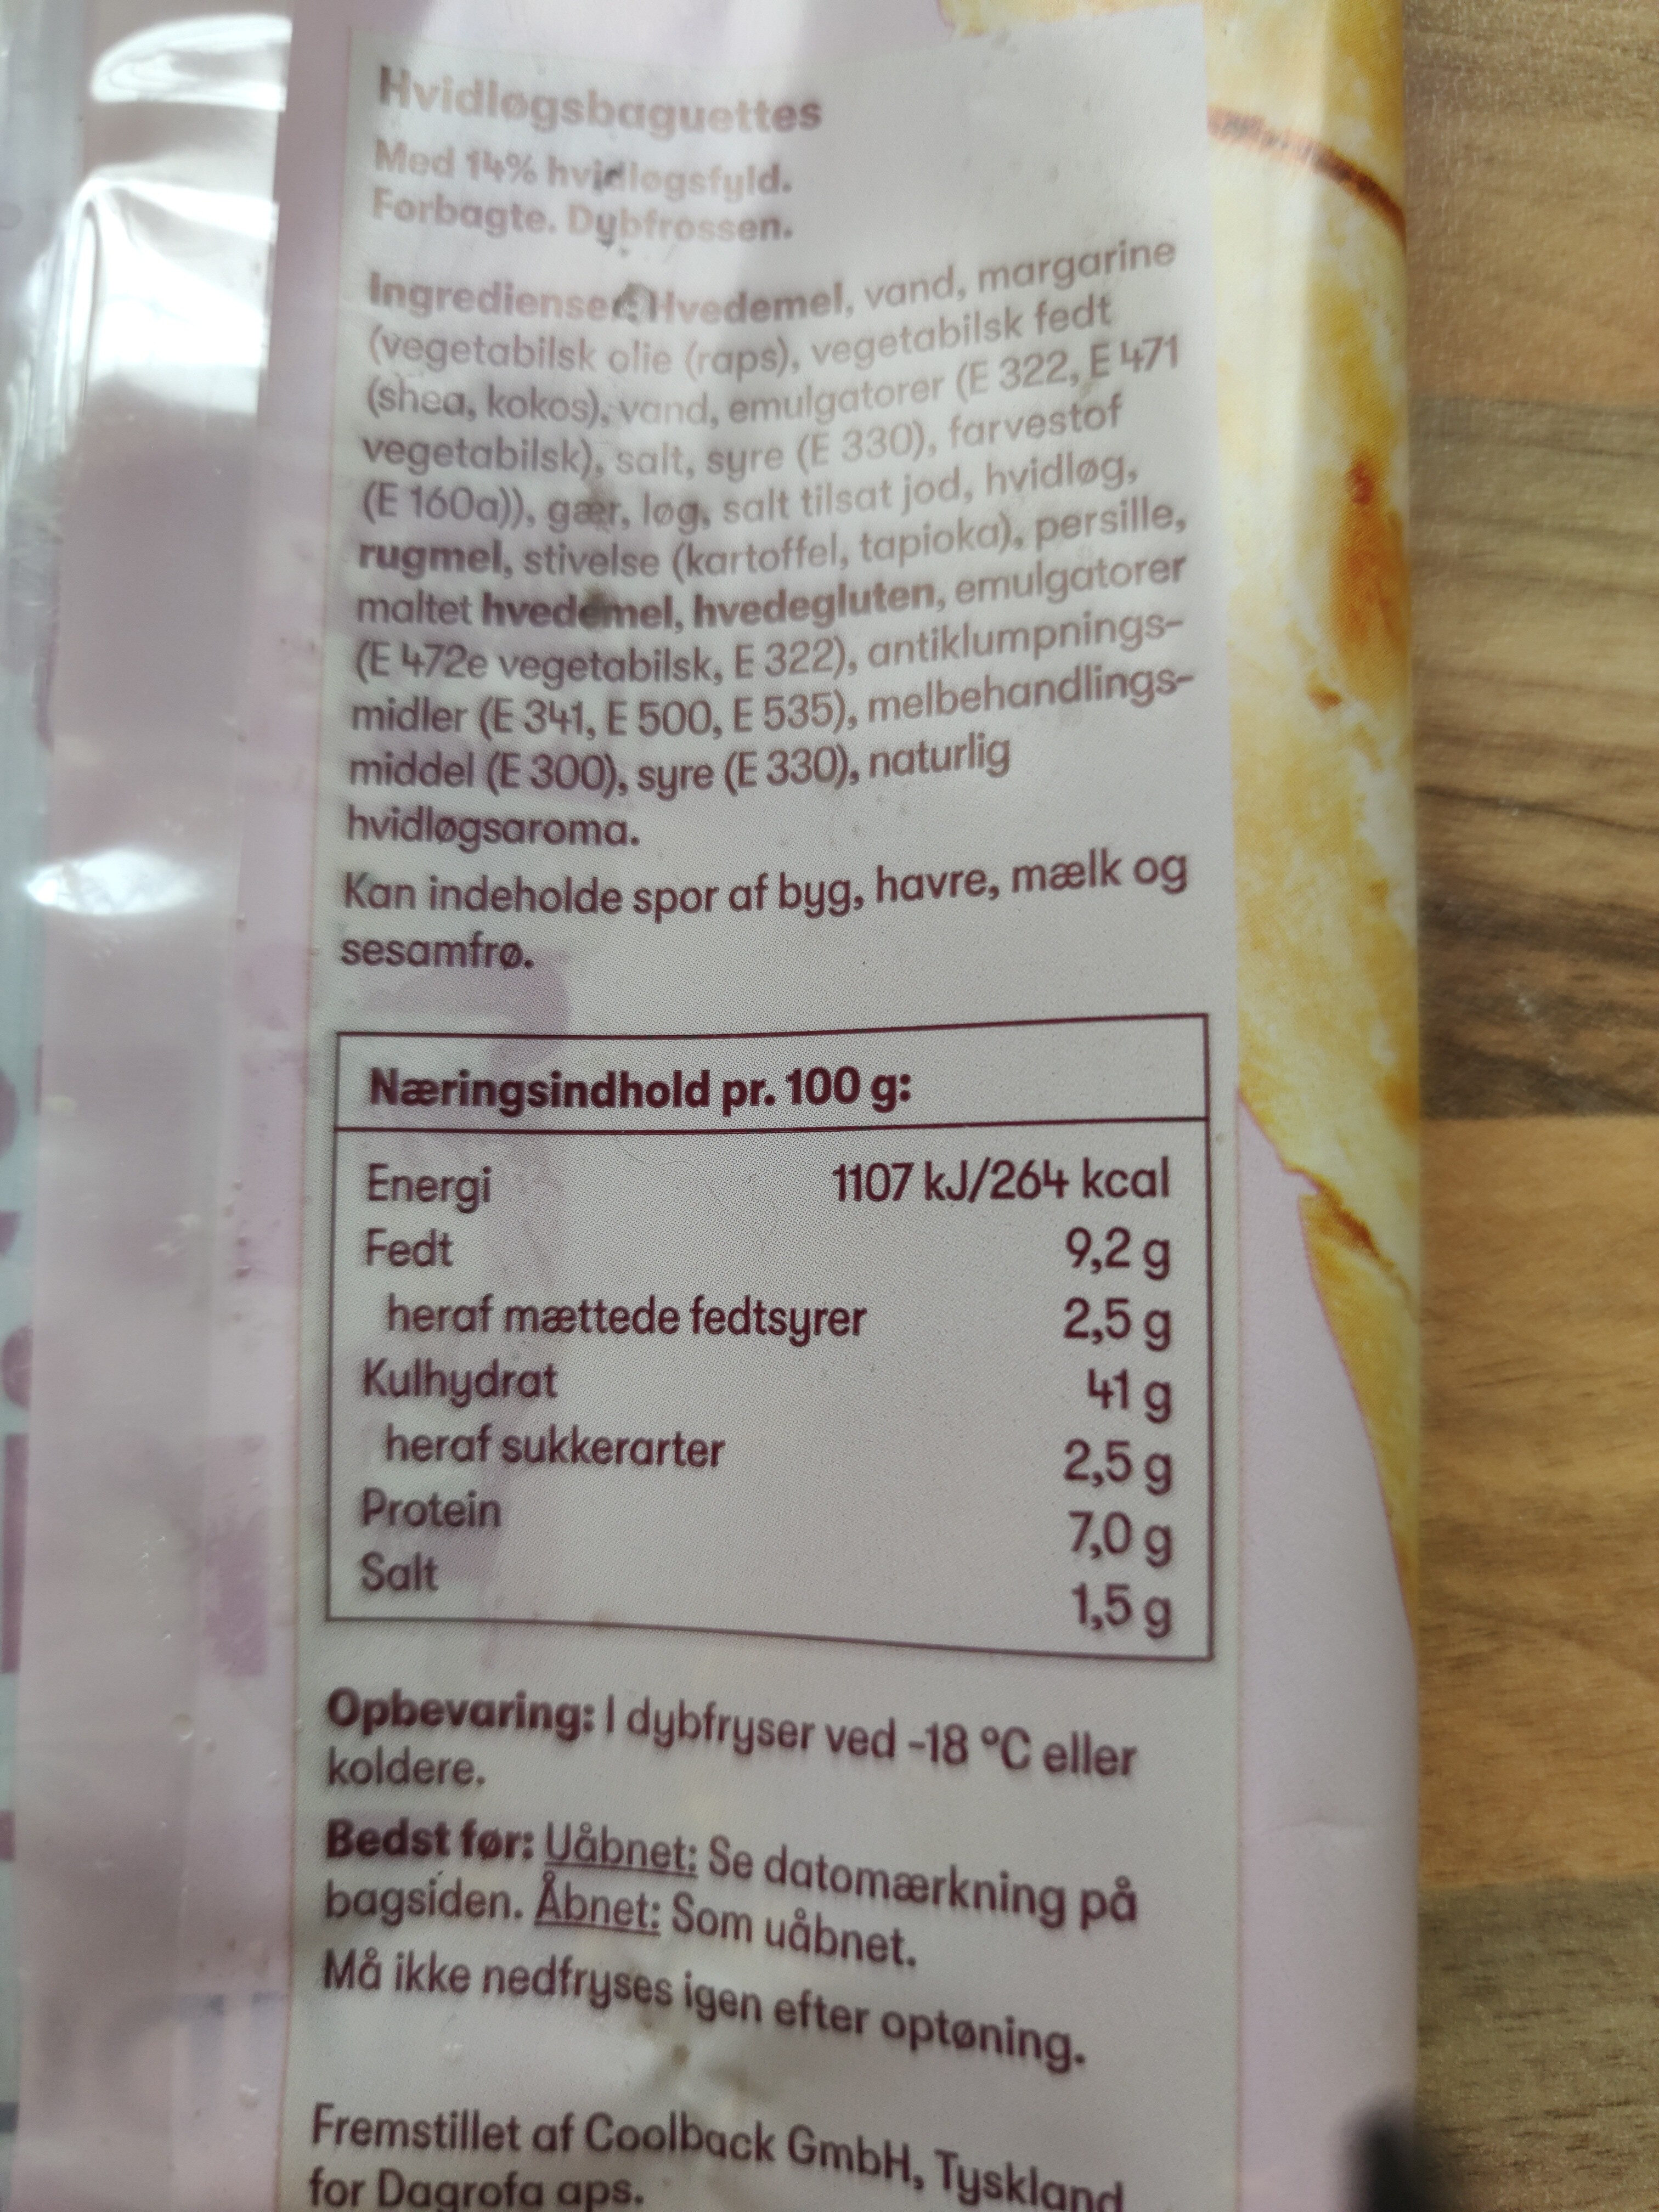 Hvidløgs Baguettes - Ernæringsfakta